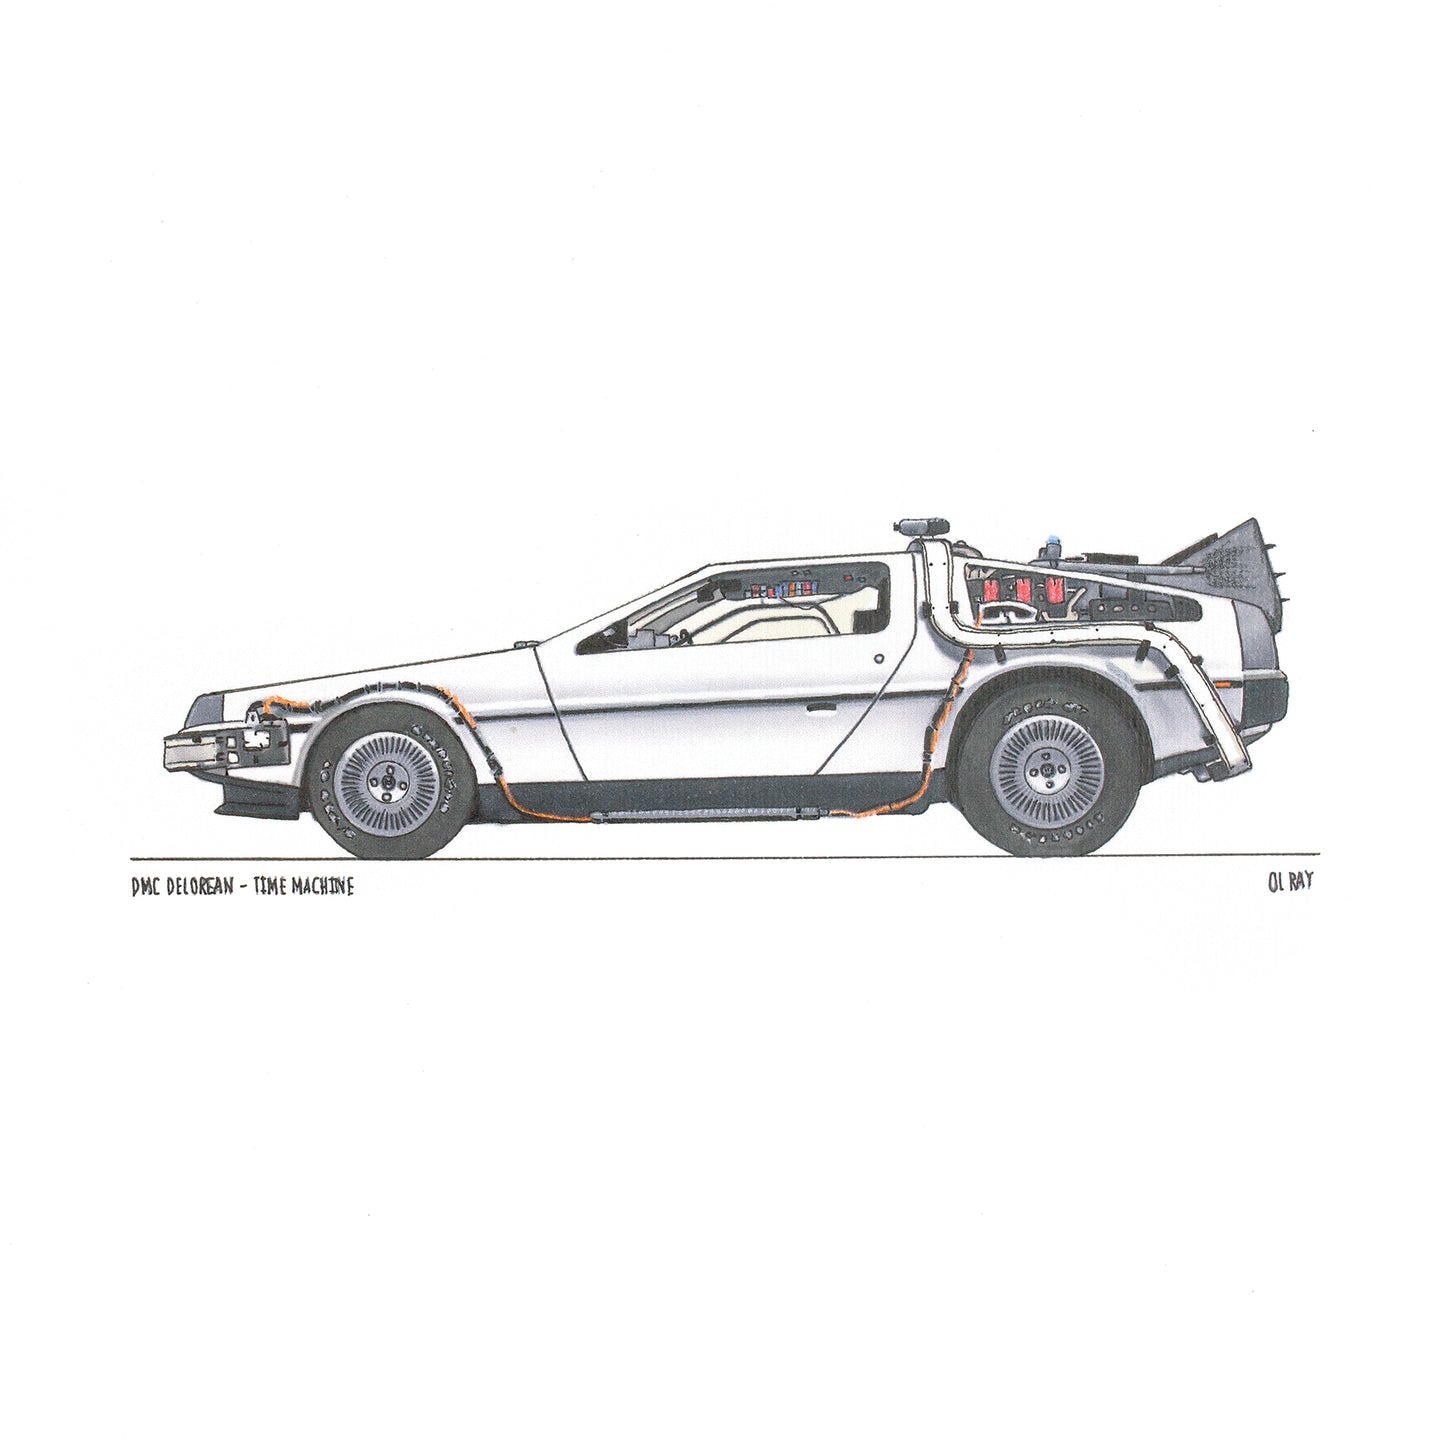 DMC DeLorean - Timemachine, wall art print